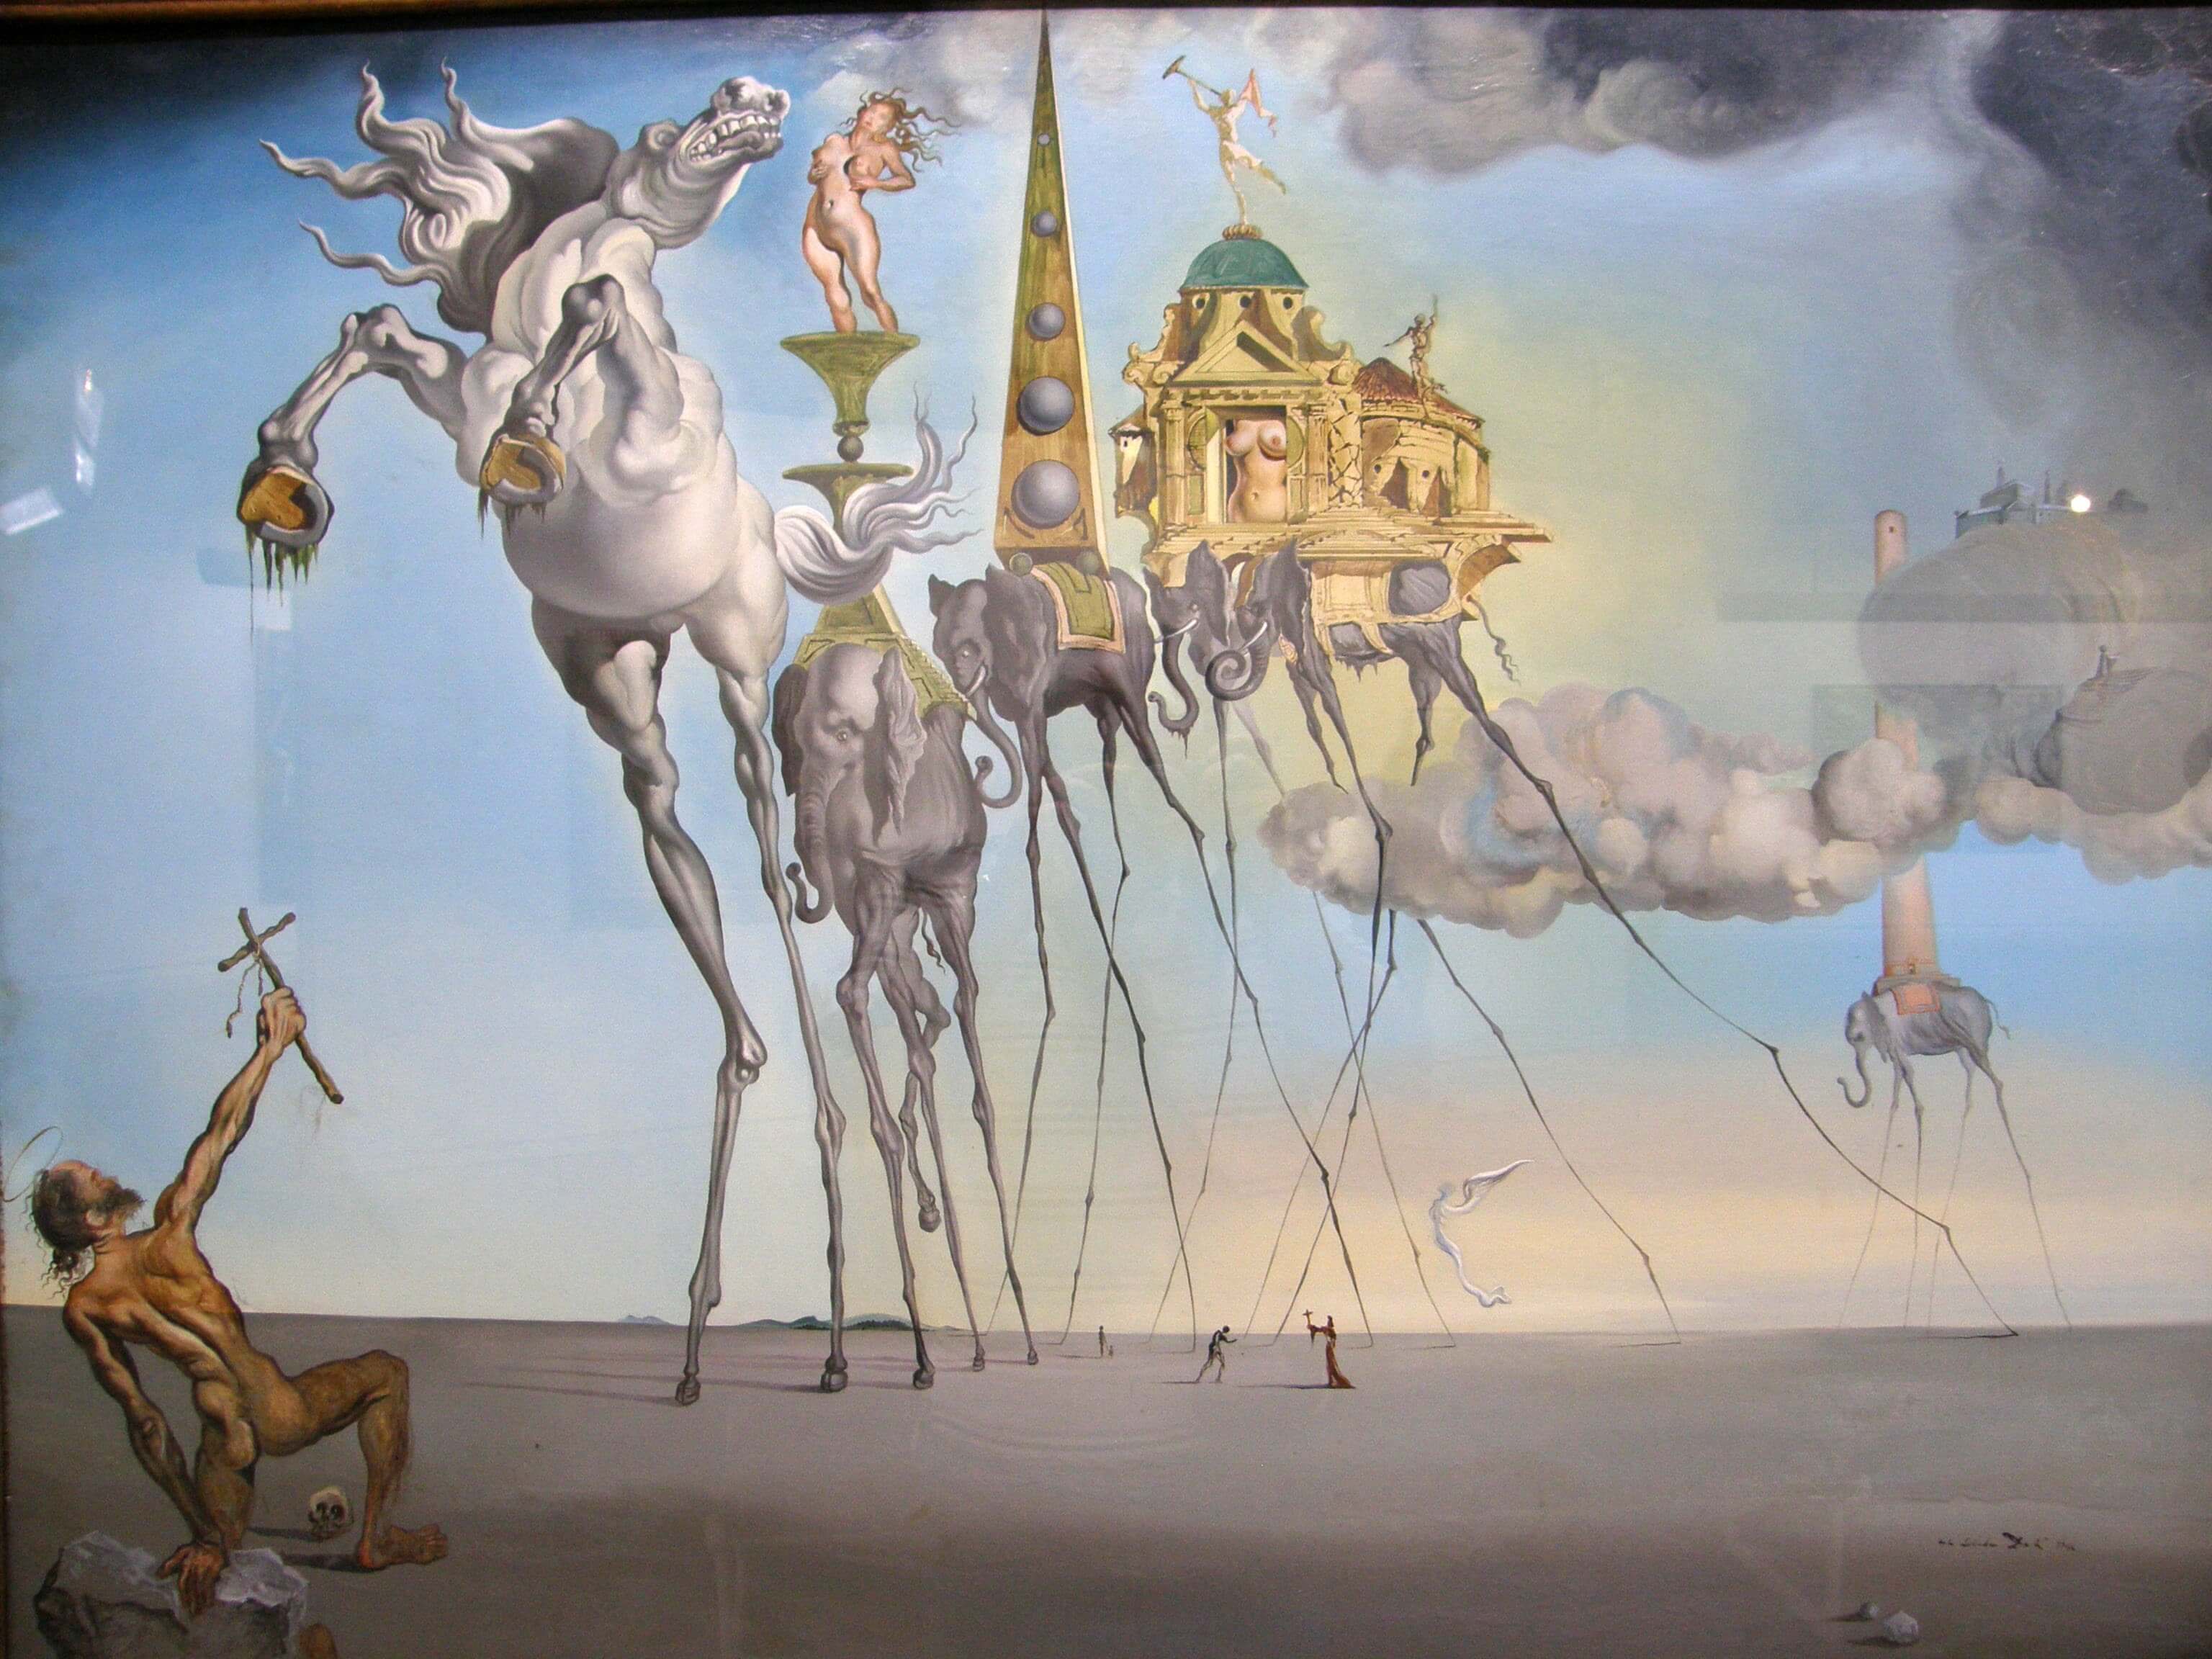 Dali painting : the temptation of saint antoine